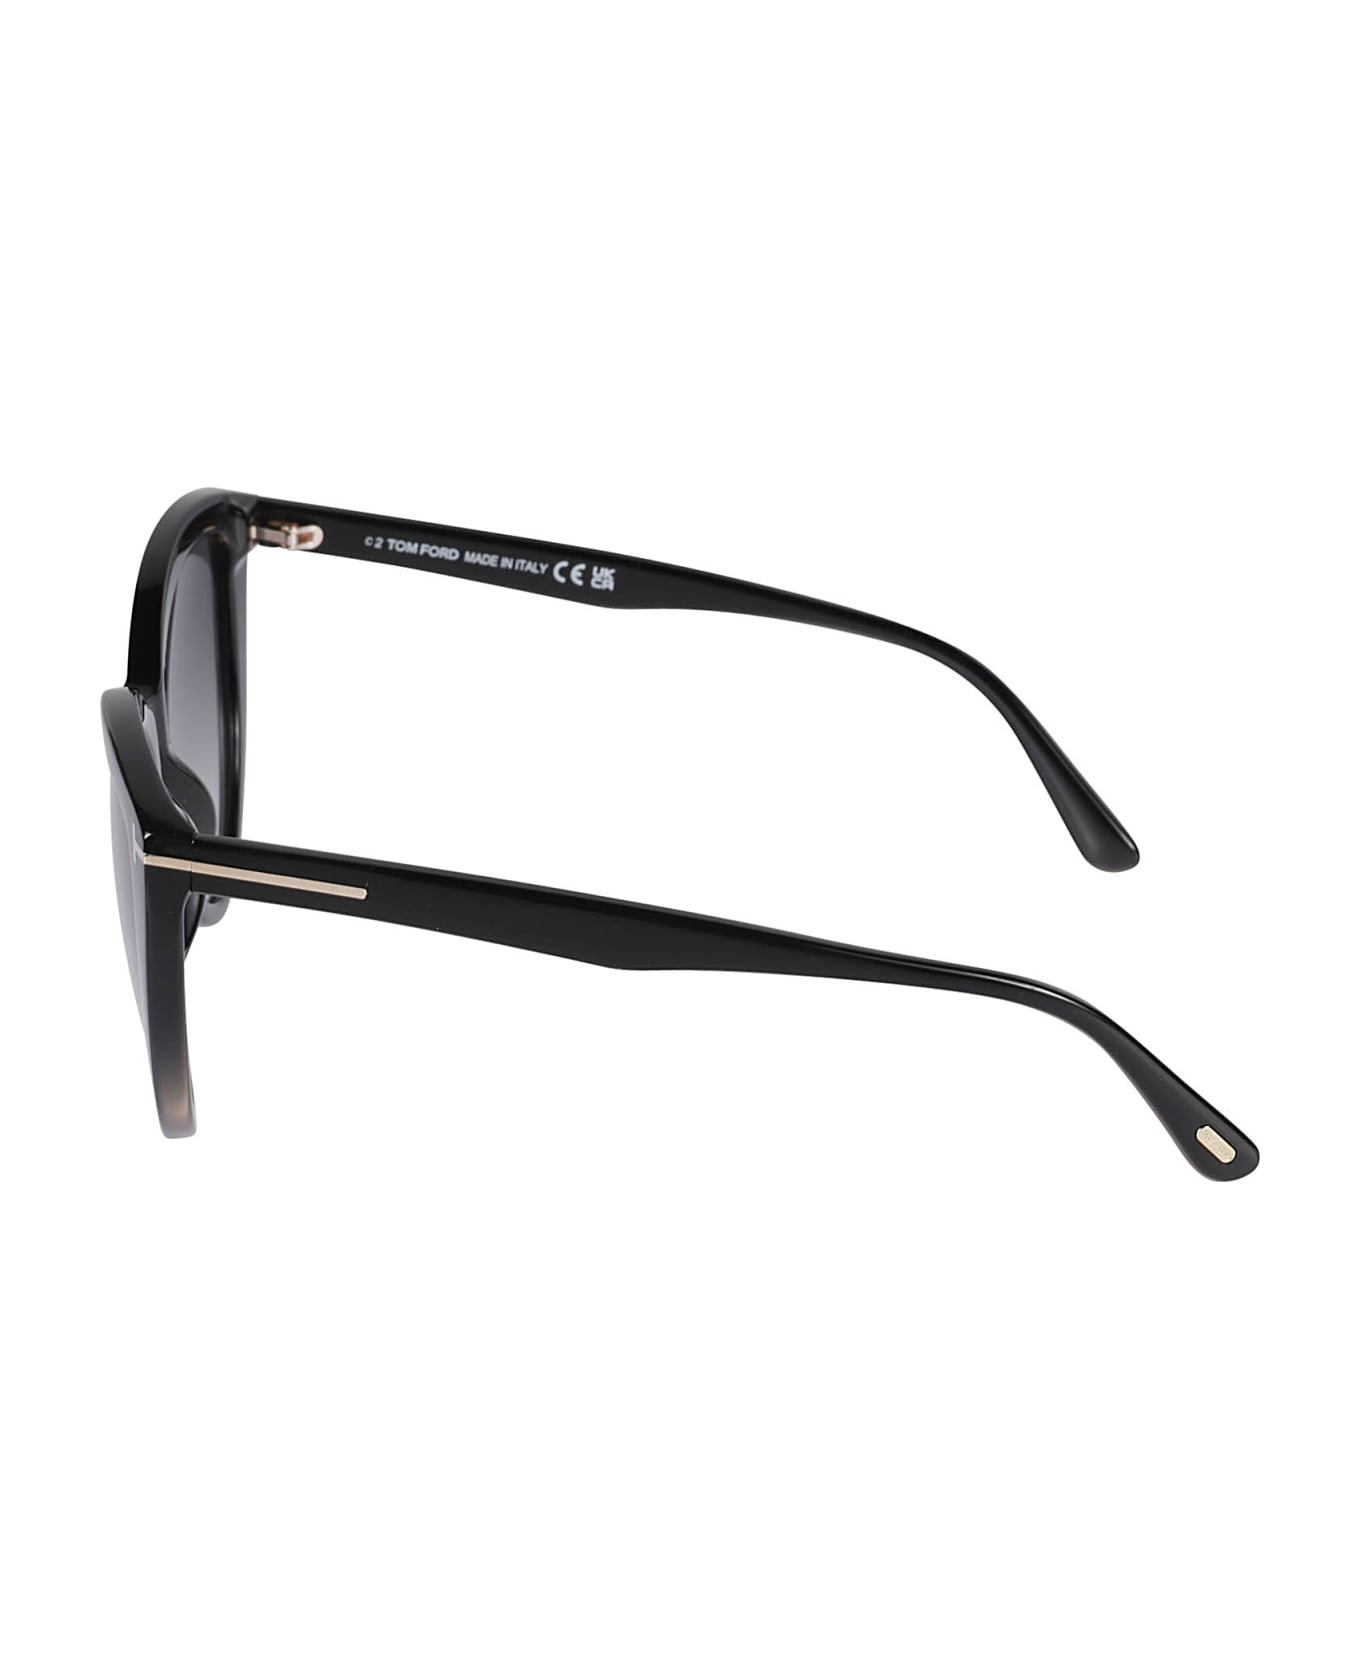 Tom Ford Eyewear Round Lens T-plaque Sunglasses - N/A